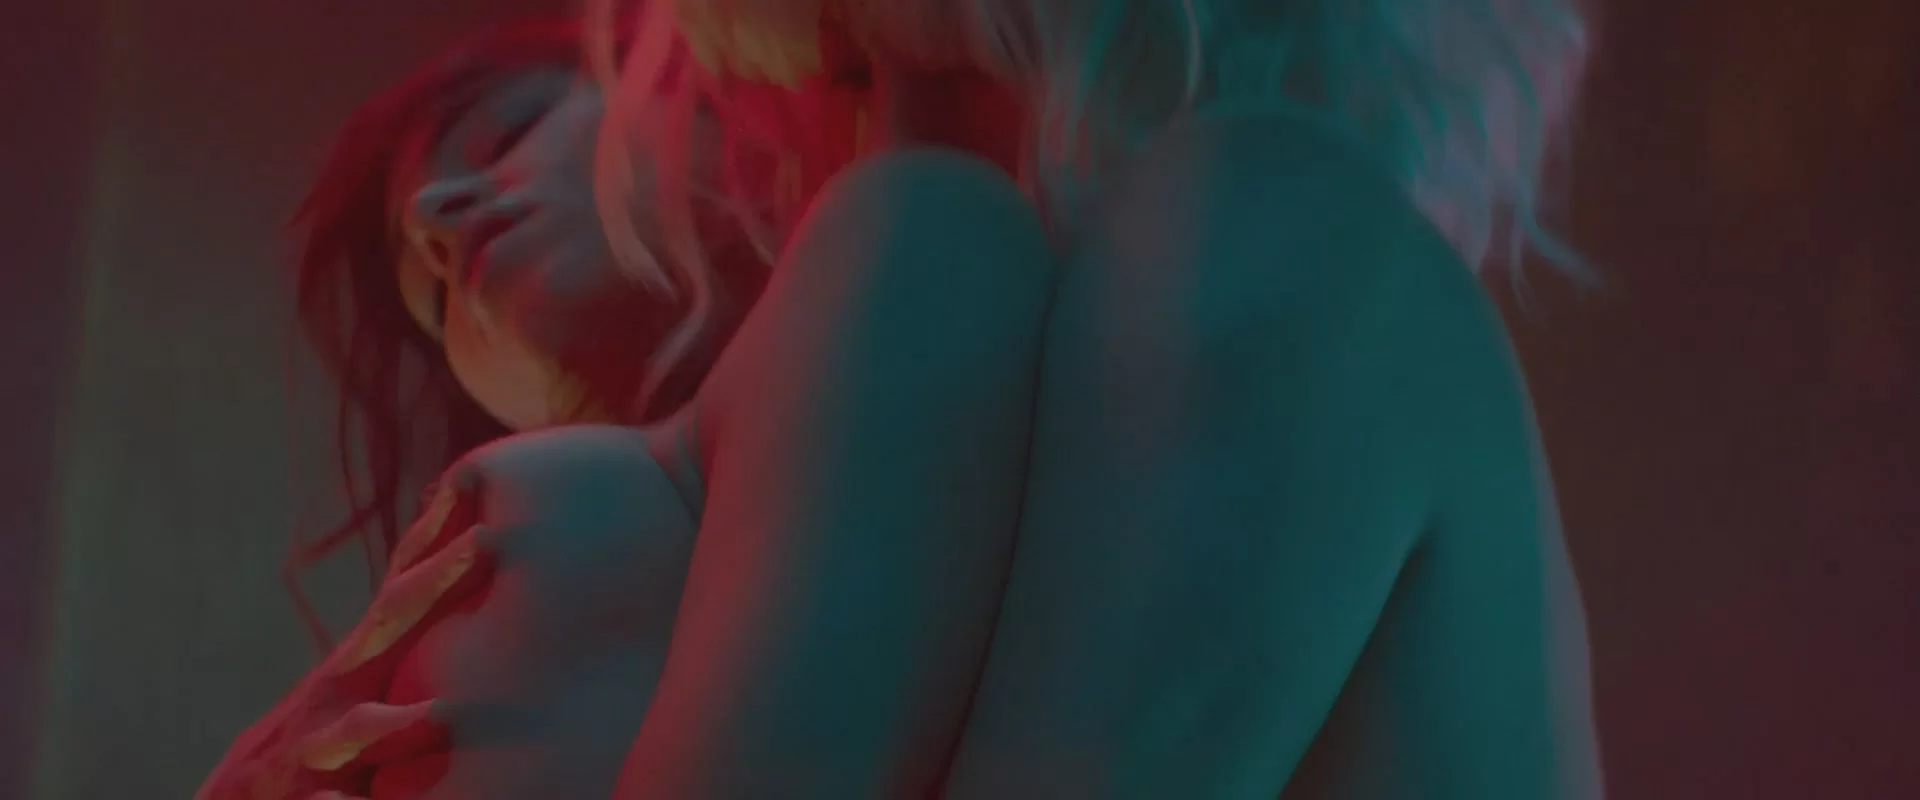 Atomic blonde sex scene video